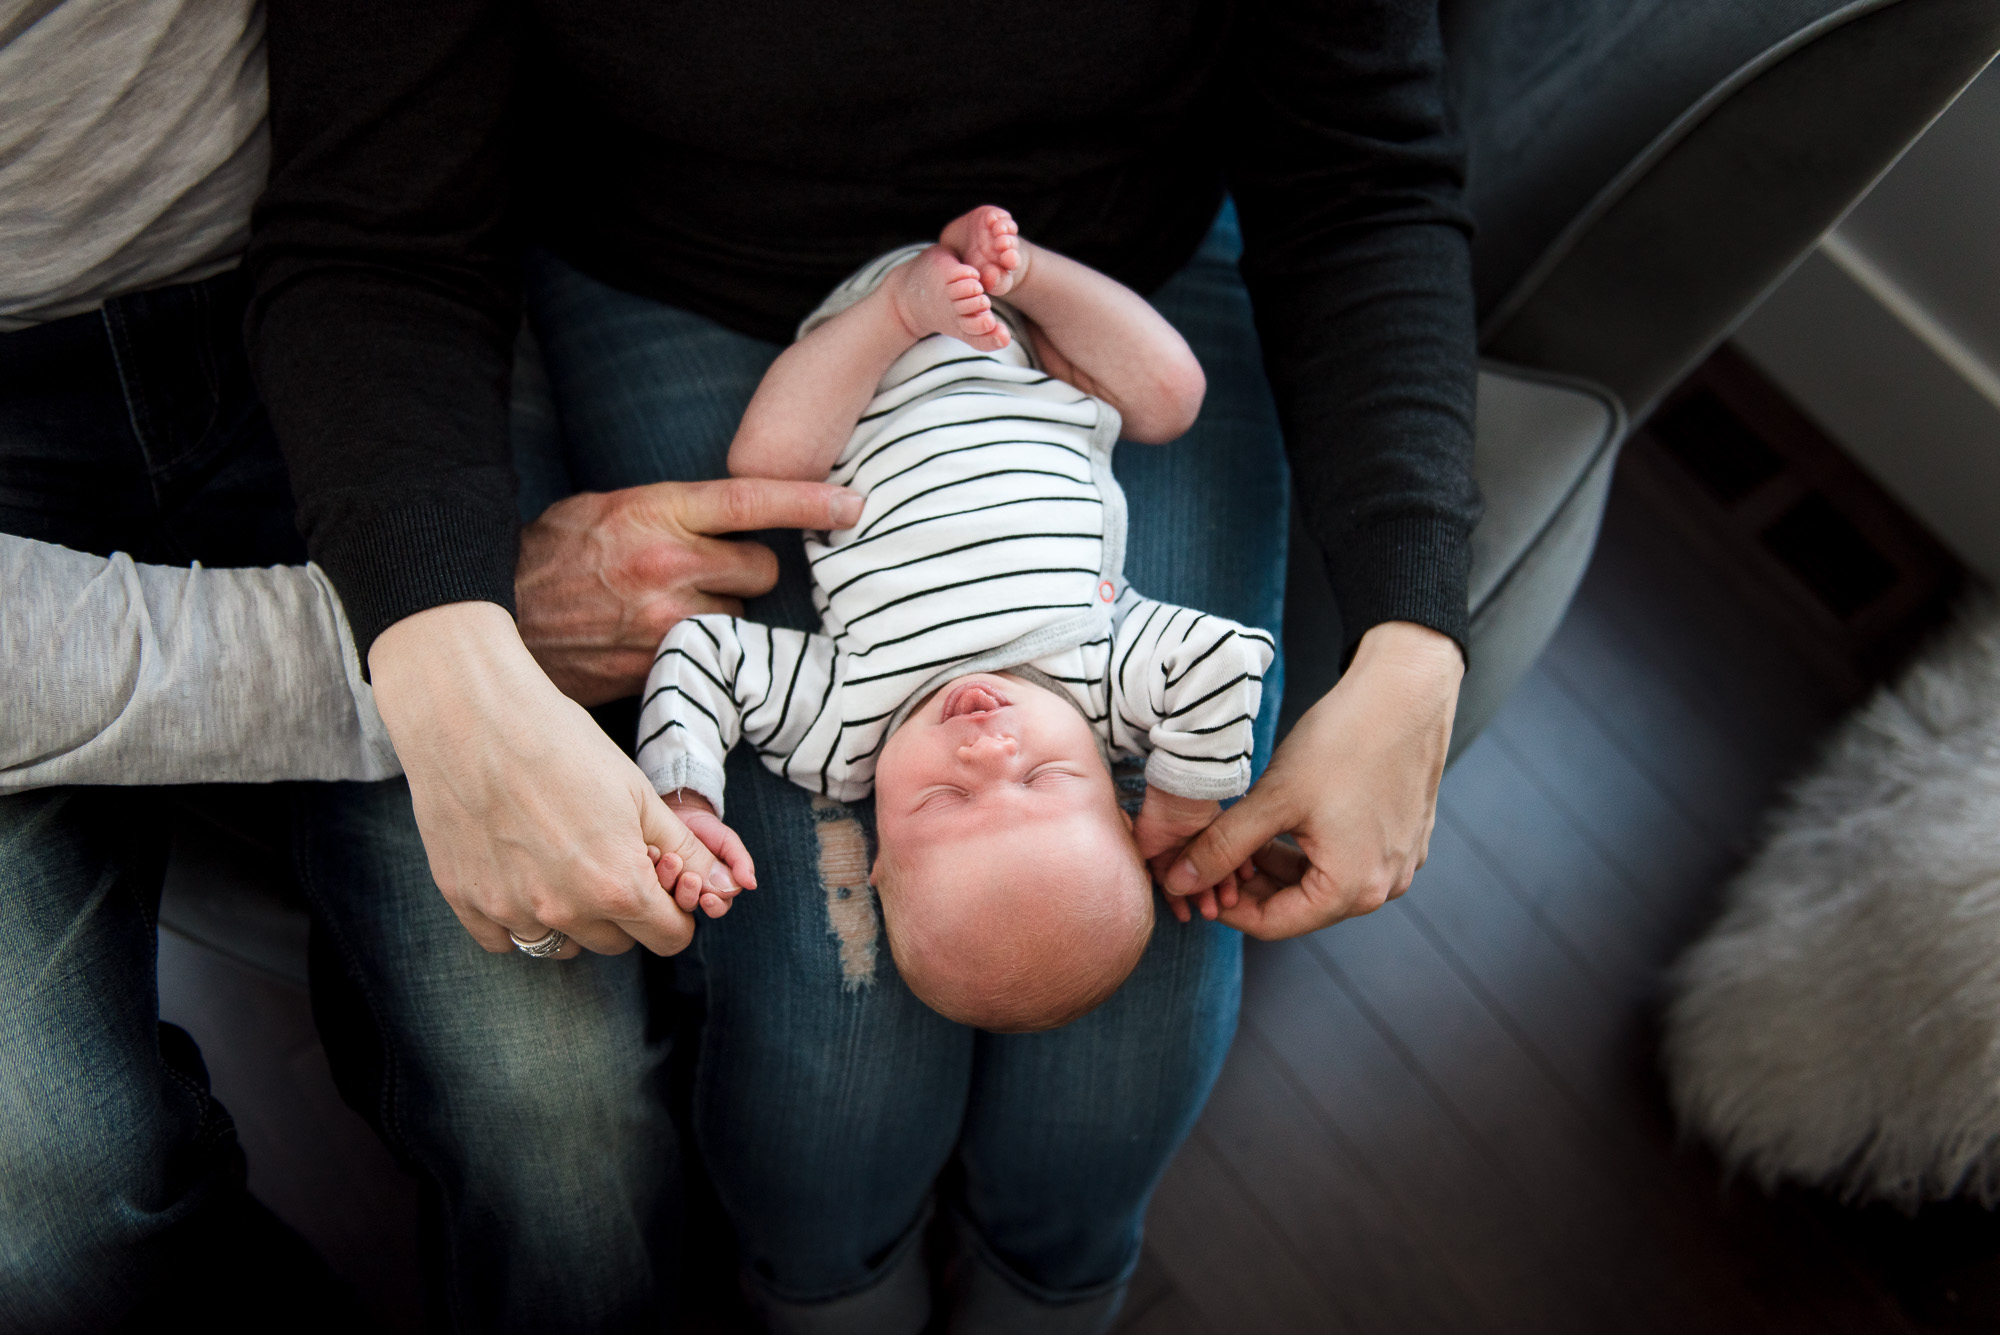 Parents touch their newborn baby during an Edmonton newborn photo session